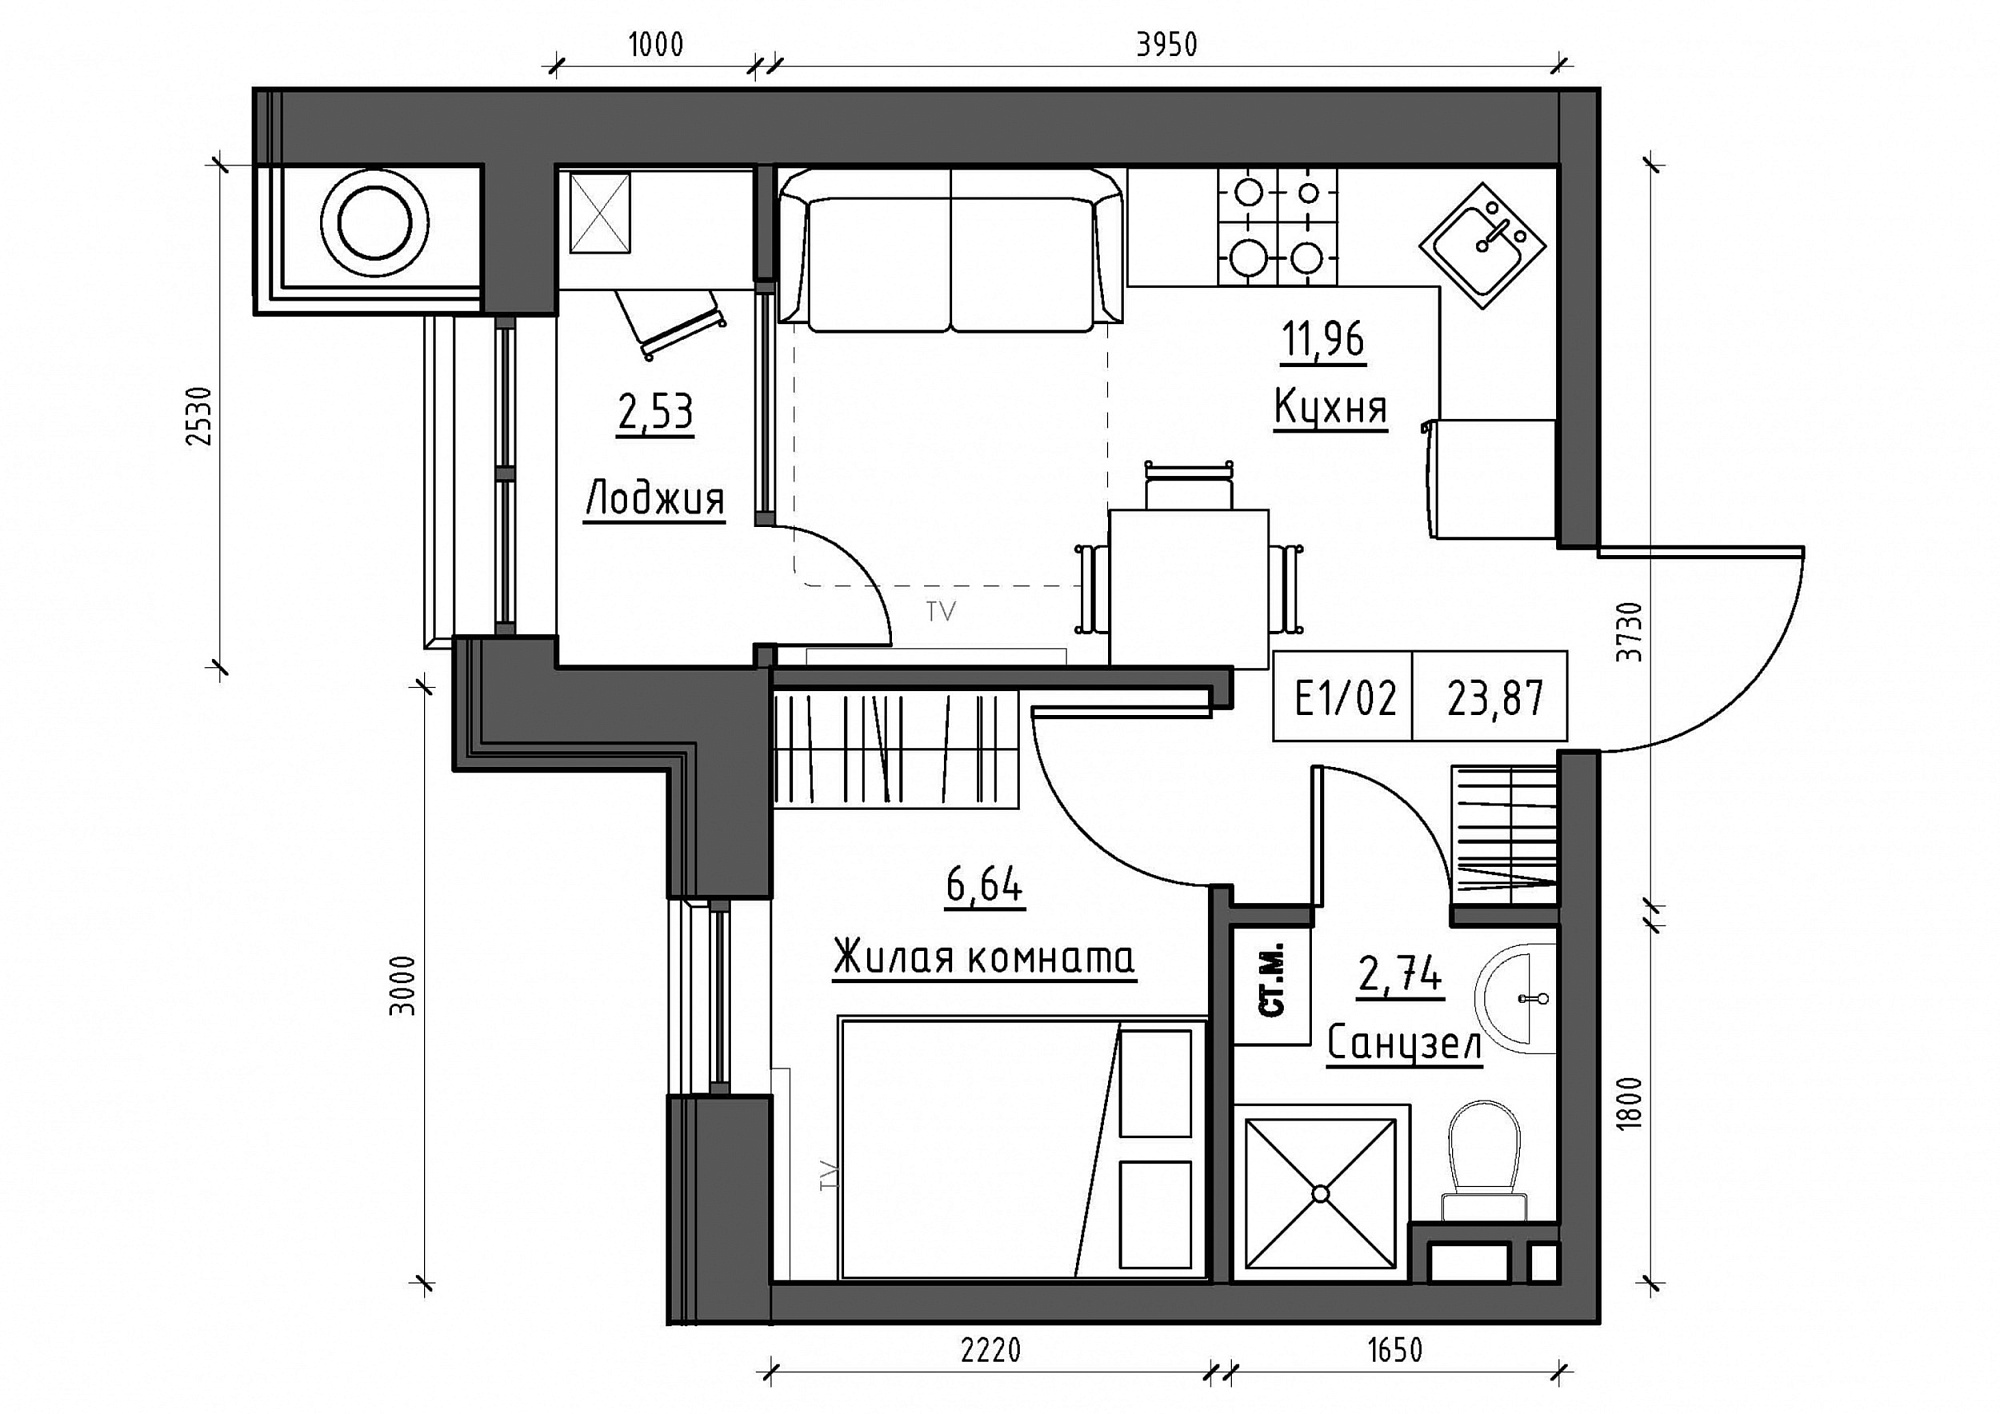 Planning 1-rm flats area 23.87m2, KS-011-03/0001.